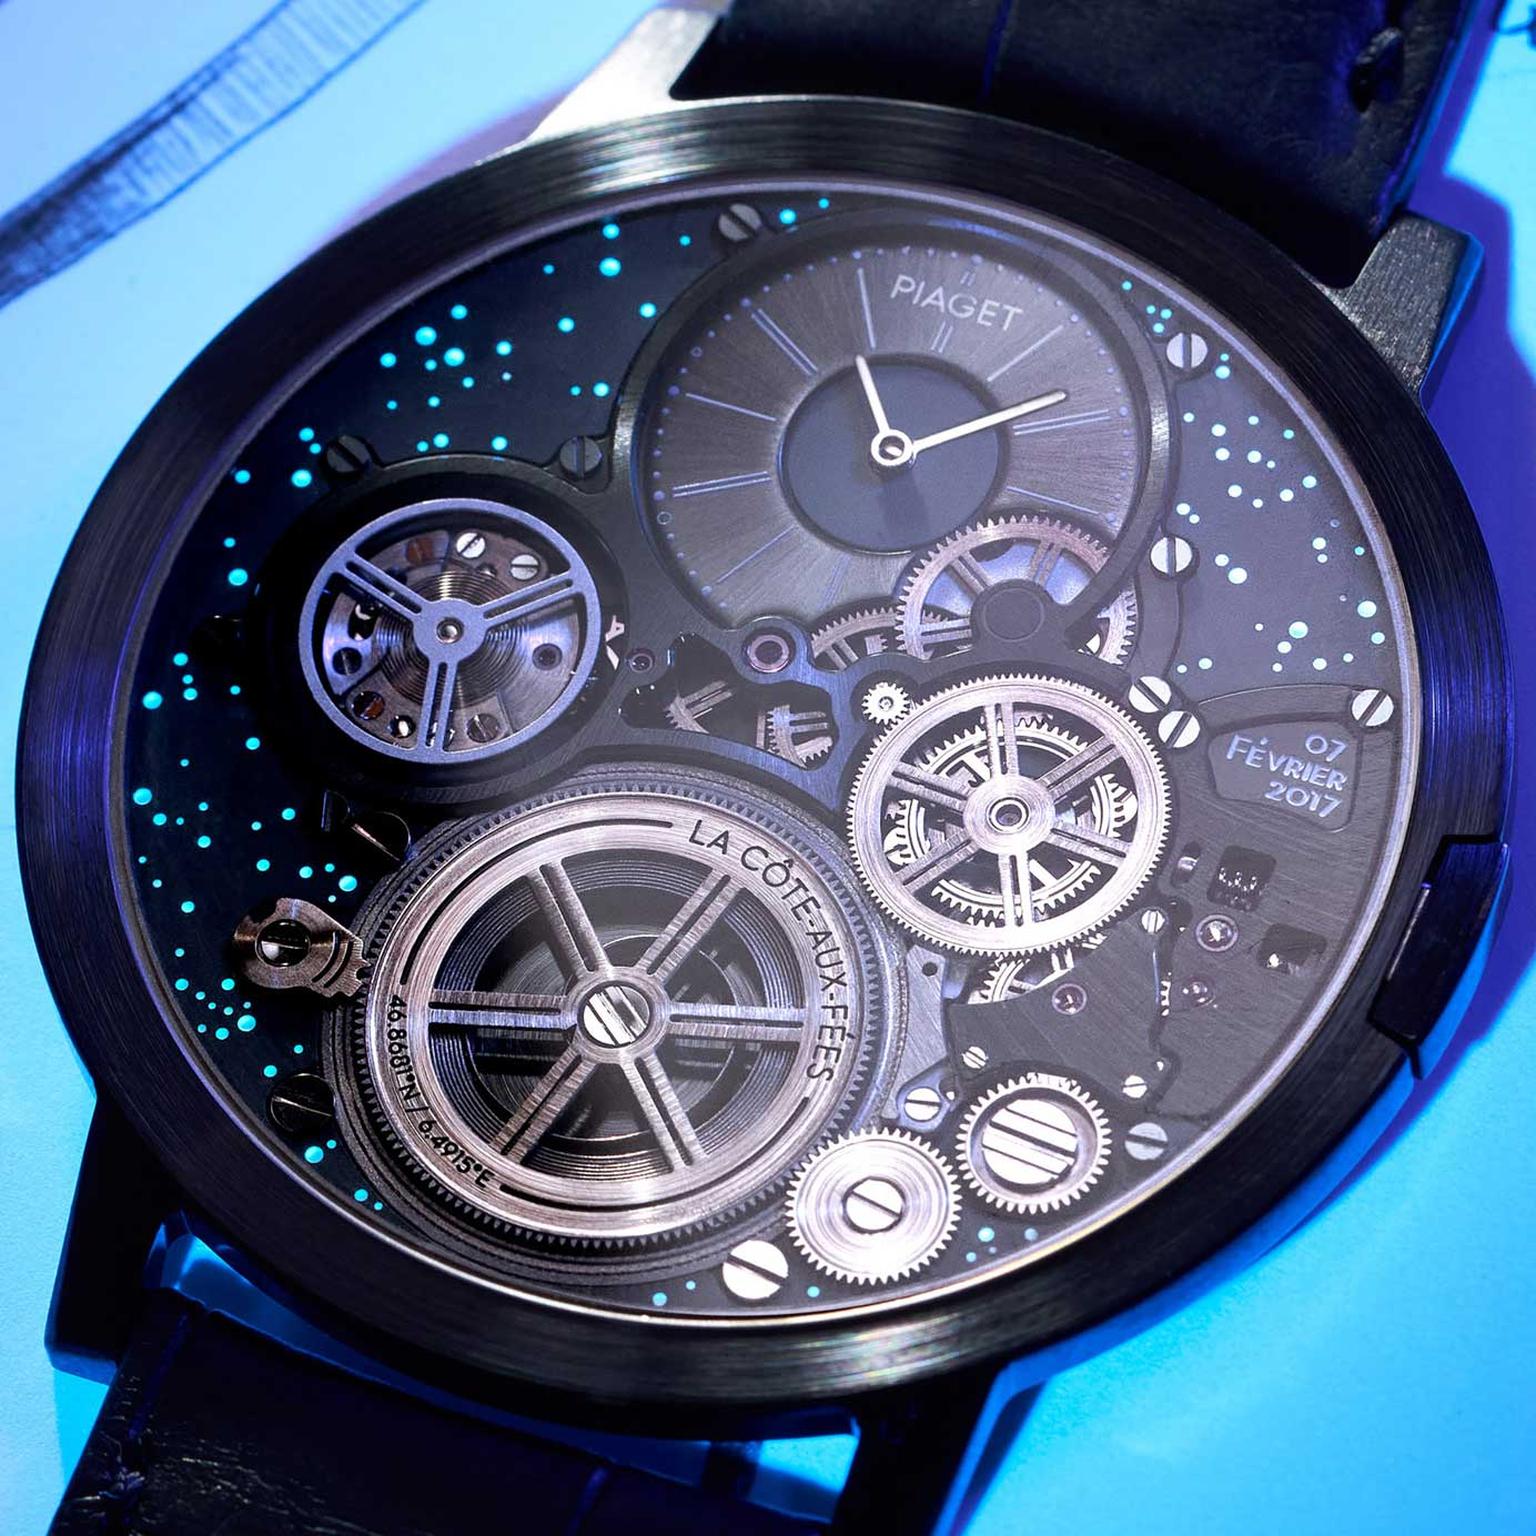 Piaget Altiplano Ultimate Concept men’s watch